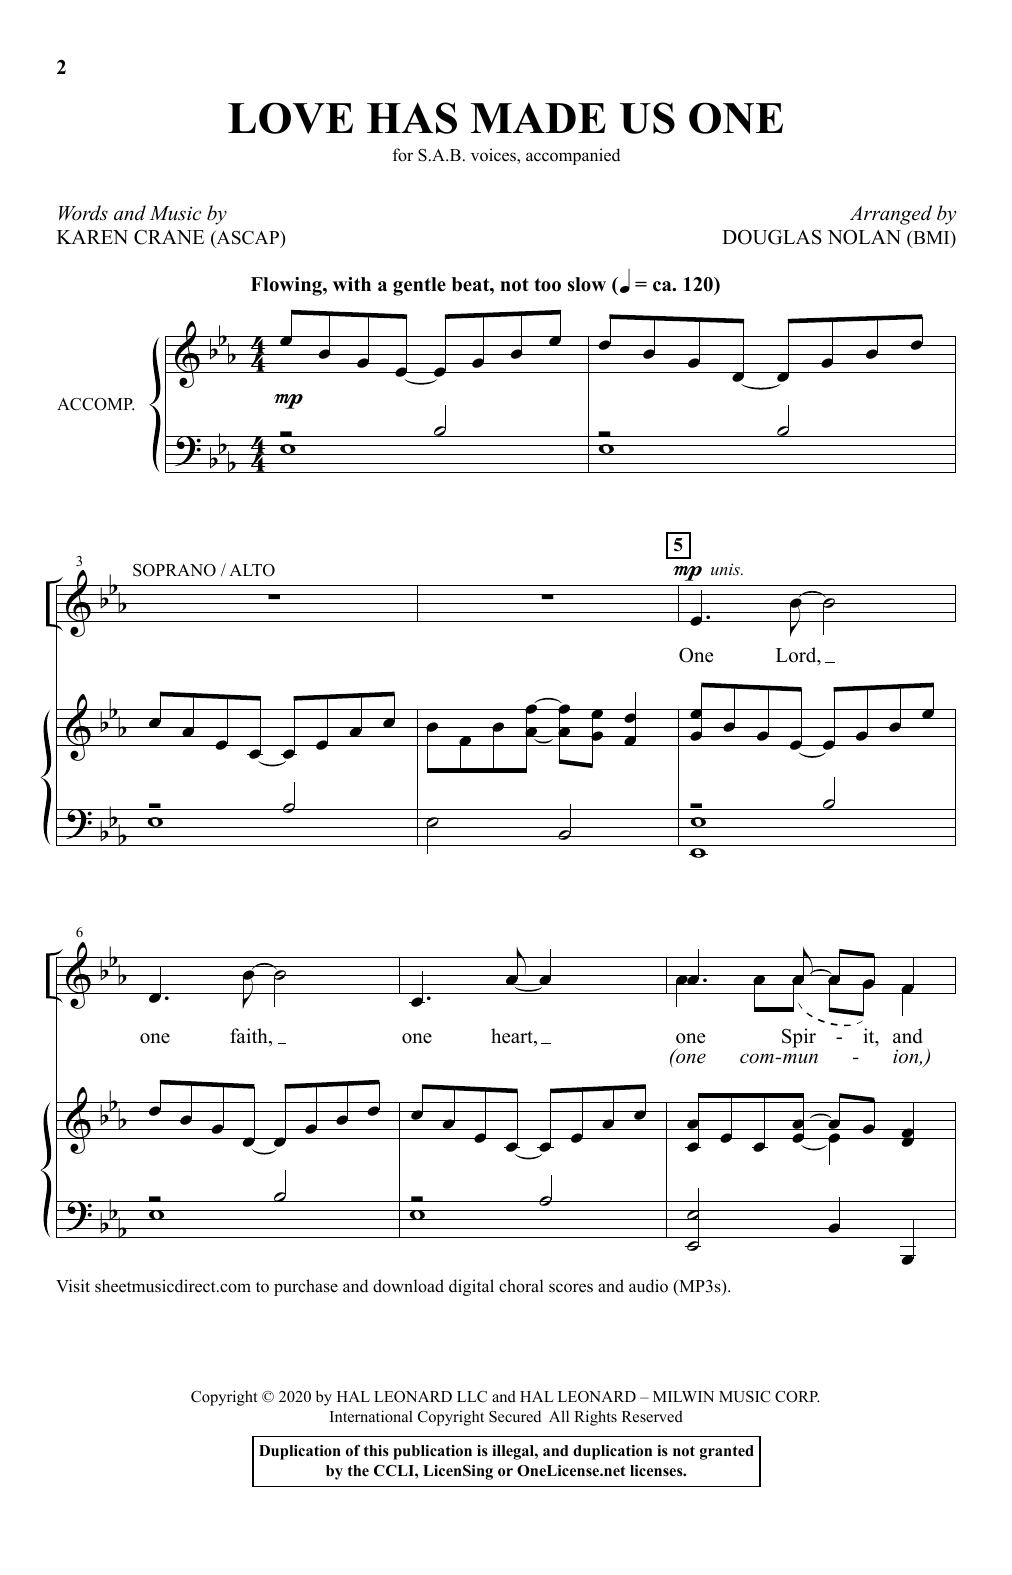 Karen Crane Love Has Made Us One (arr. Douglas Nolan) Sheet Music Notes & Chords for SAB Choir - Download or Print PDF